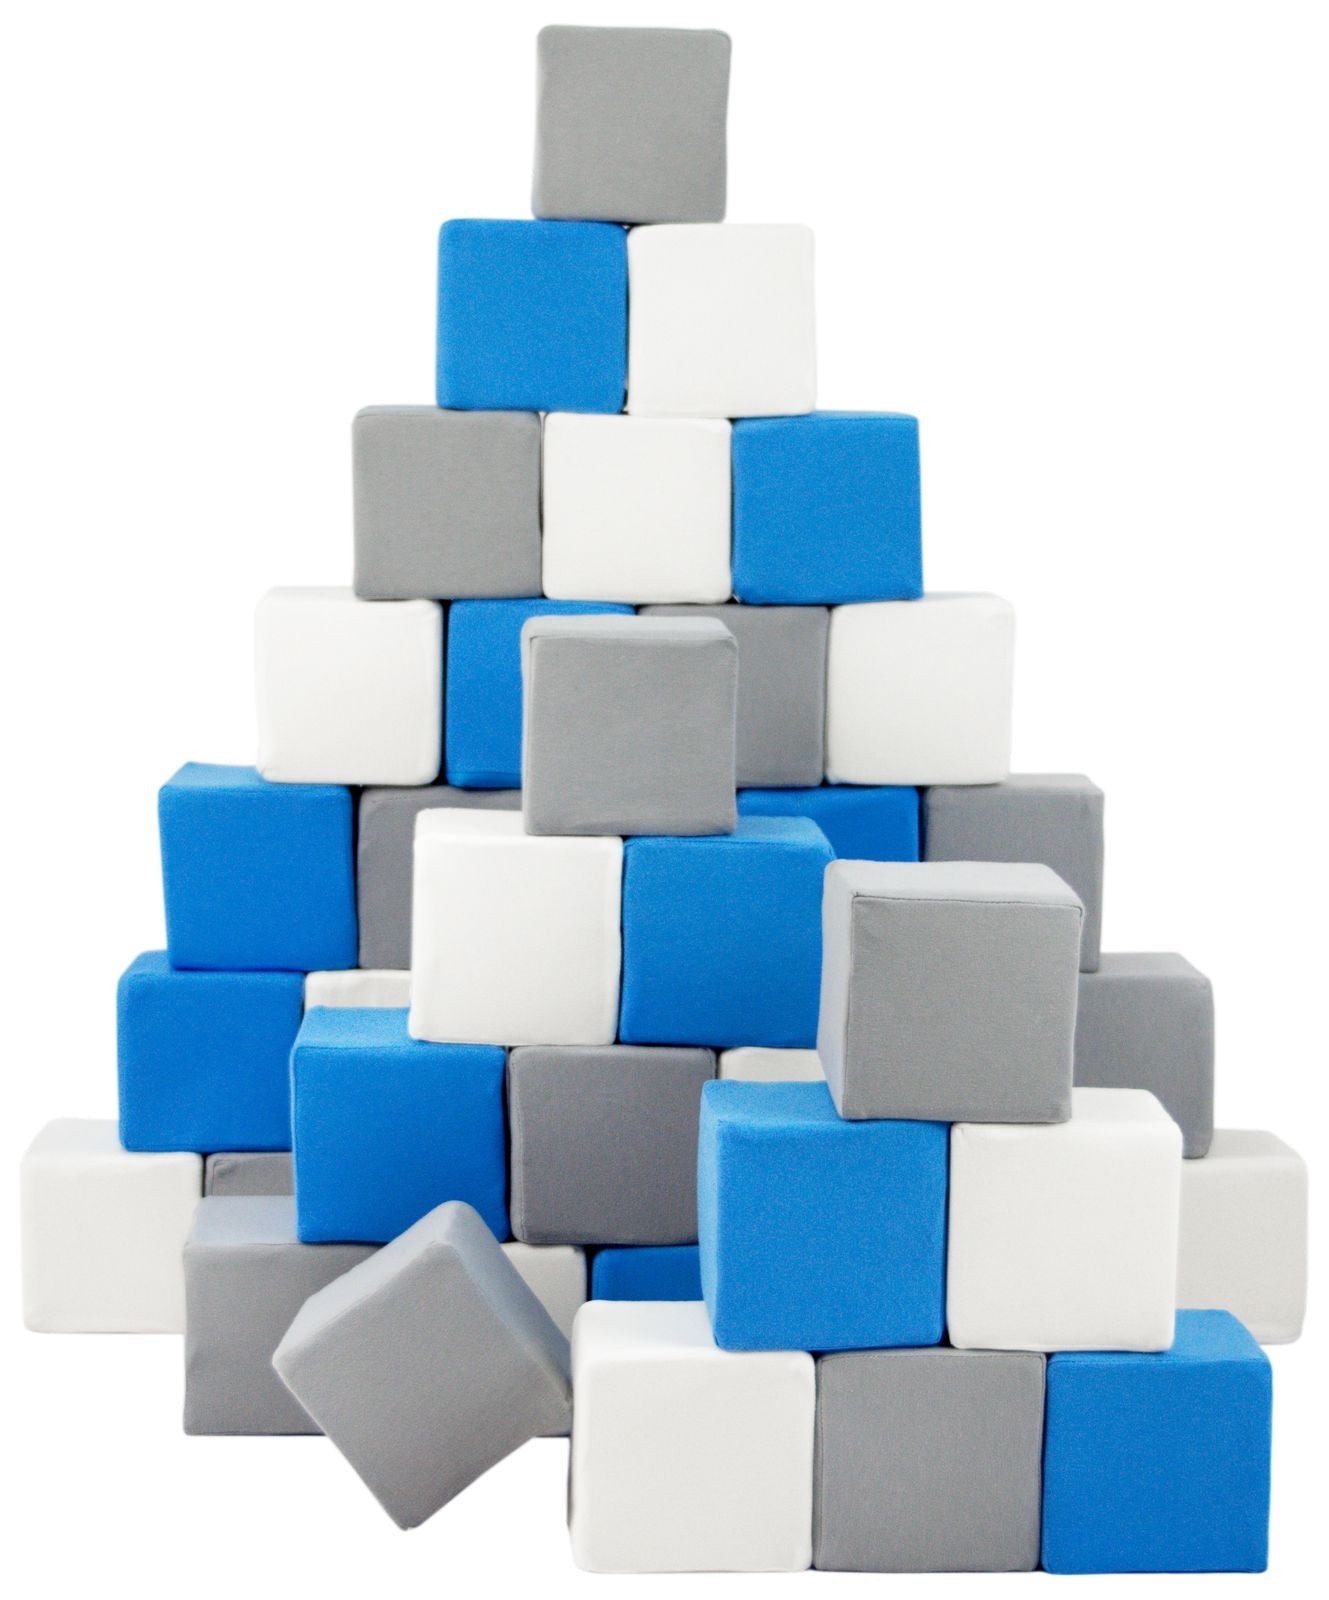 45-soft-play-blocks-soft-toy-foam-building-blocks-for-kids